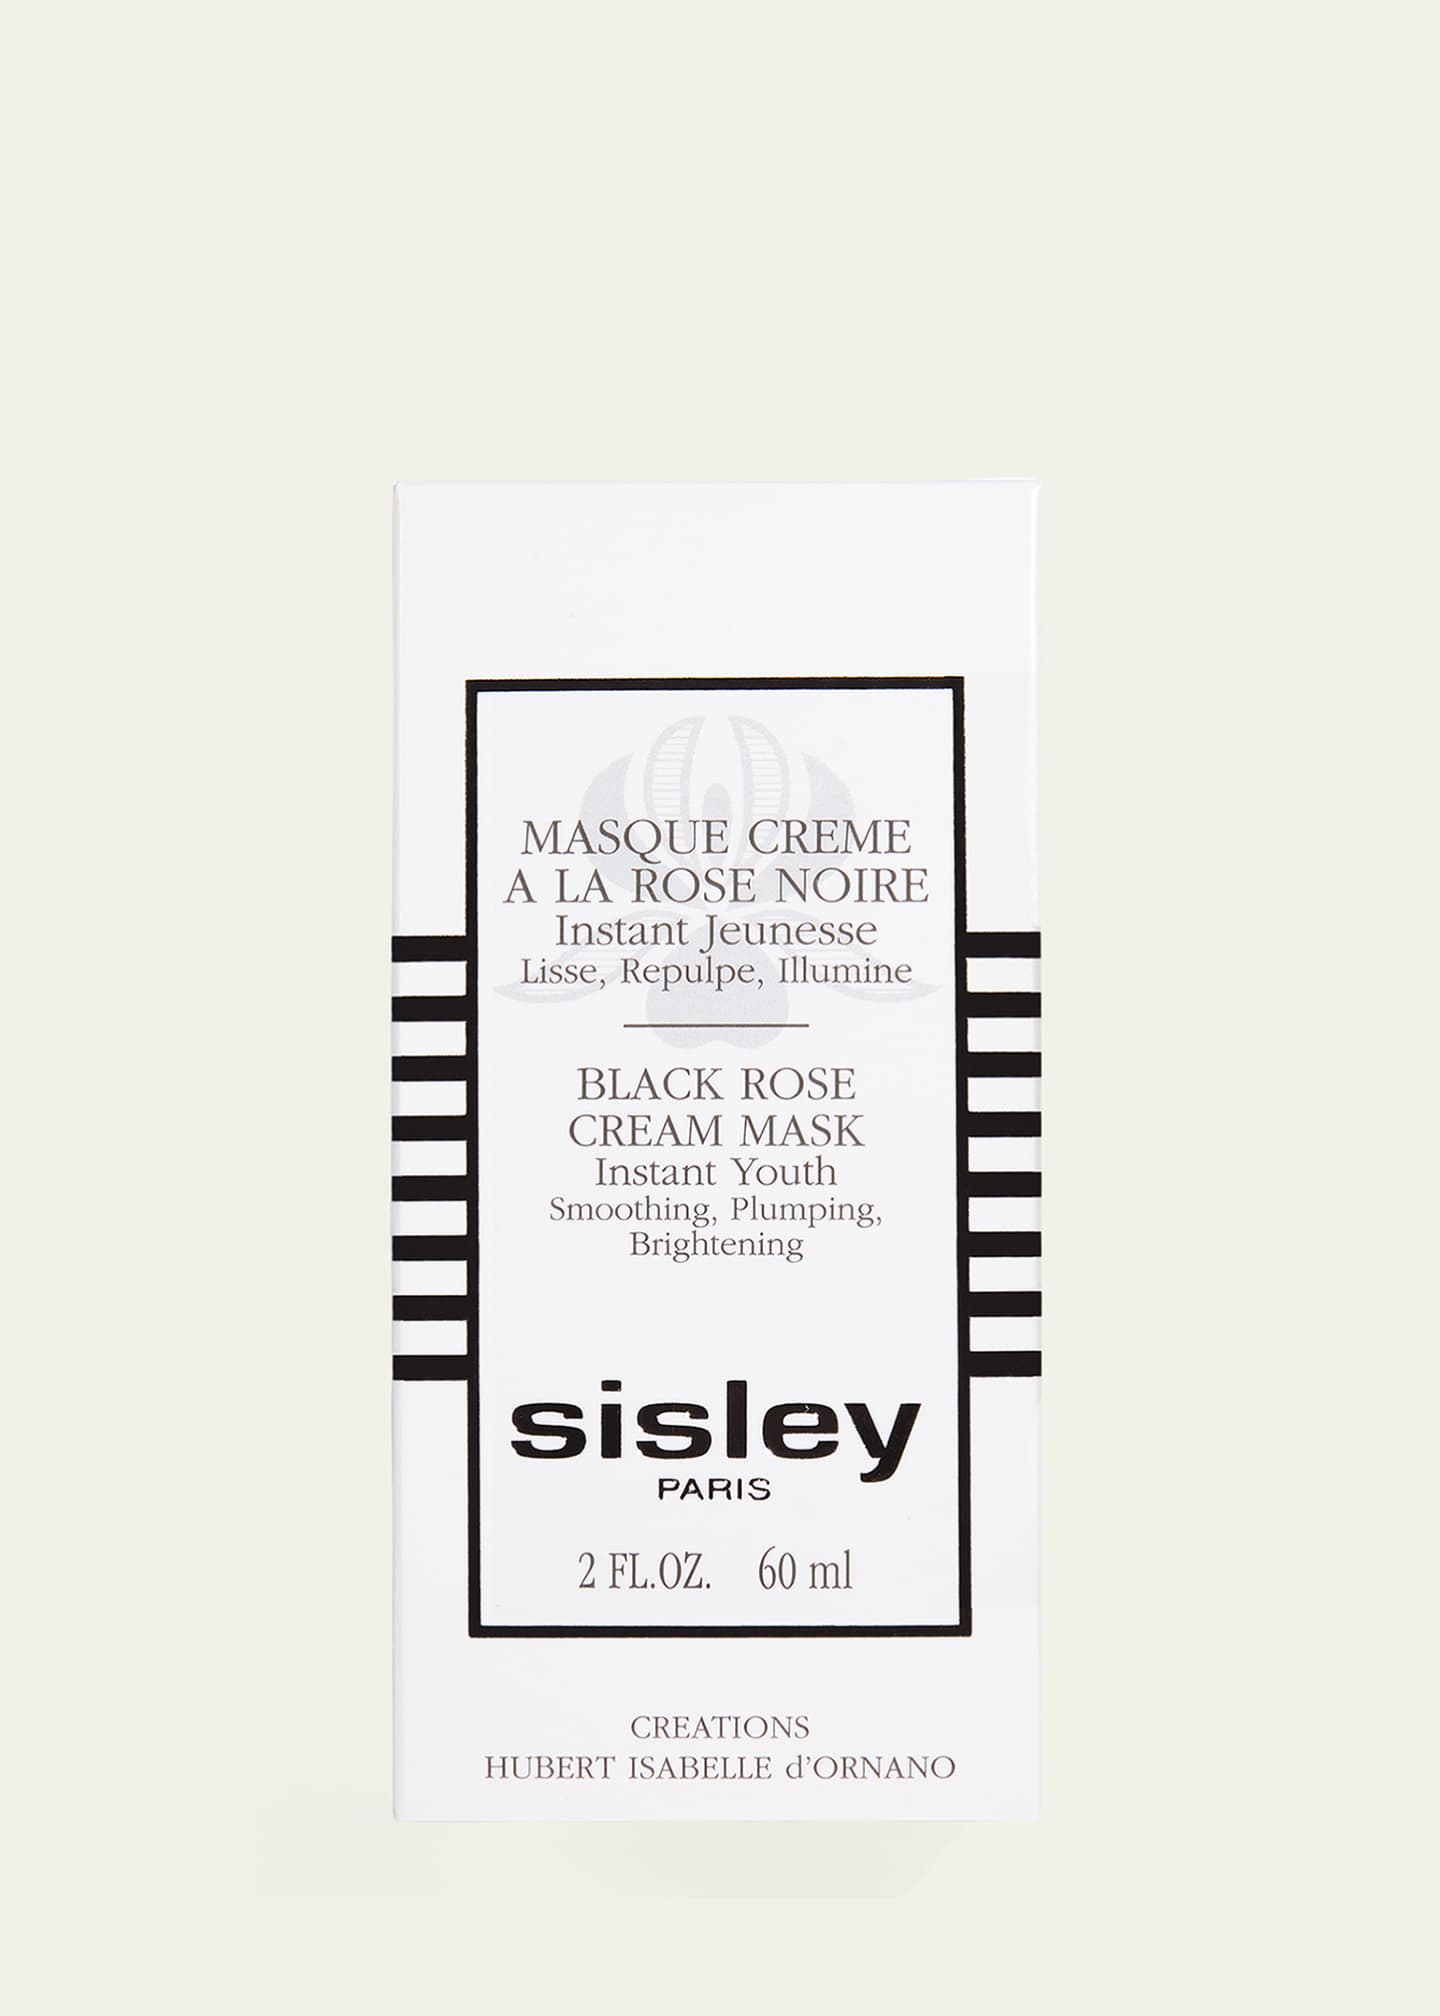 Sisley-Paris Black Rose Cream Mask, 2.1 oz. Image 3 of 3